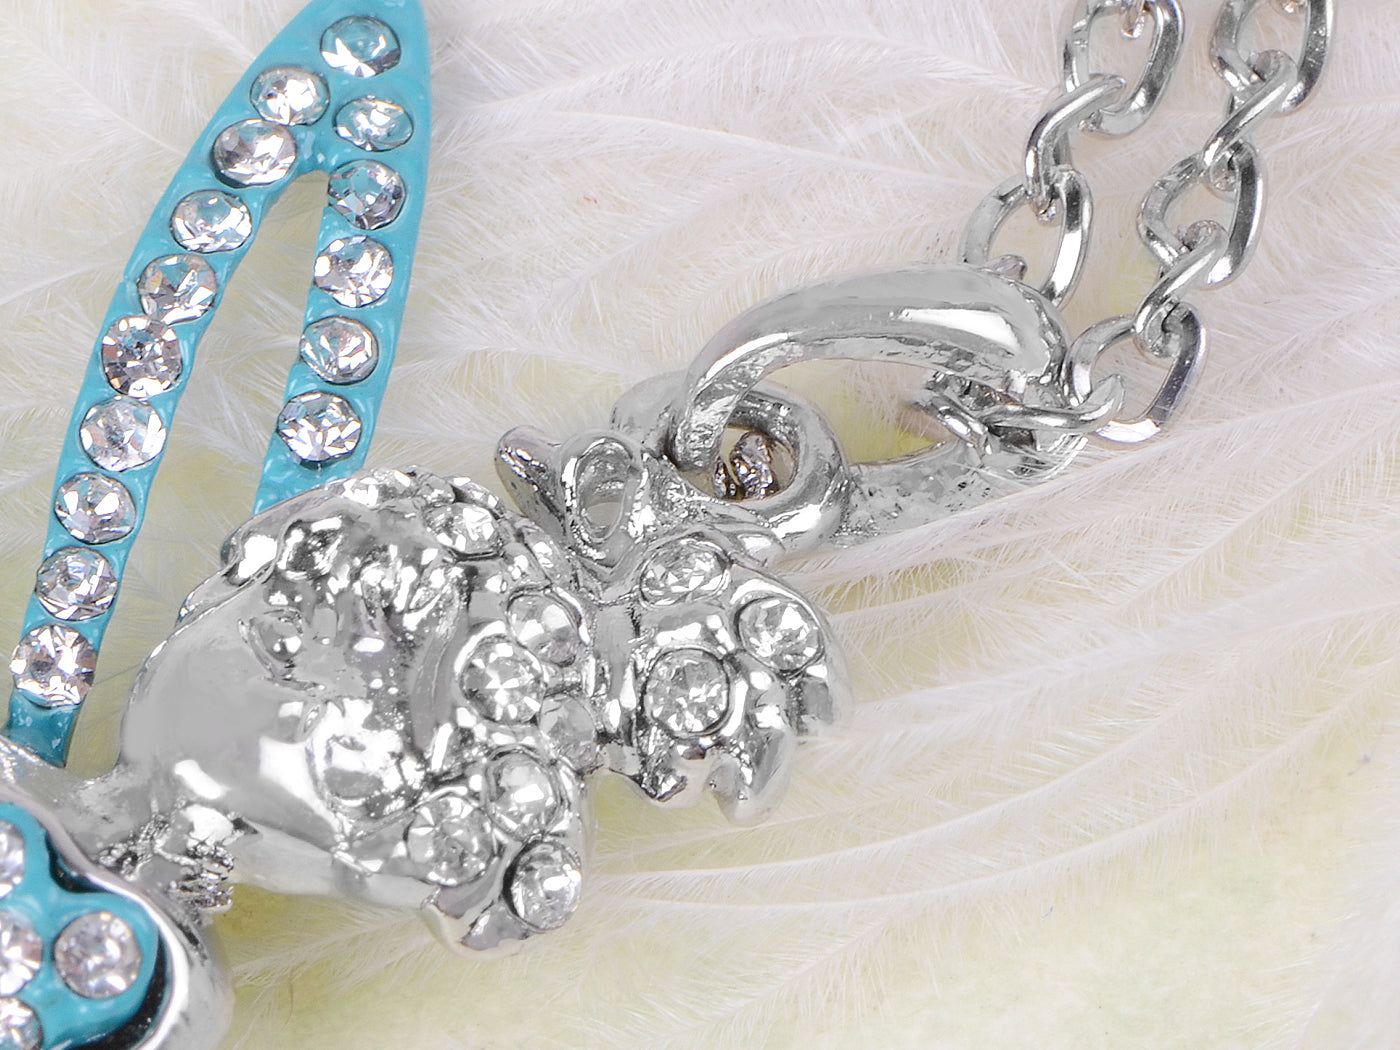 Silver Green Enamel Pixie Fairy Angel Pendant Necklace